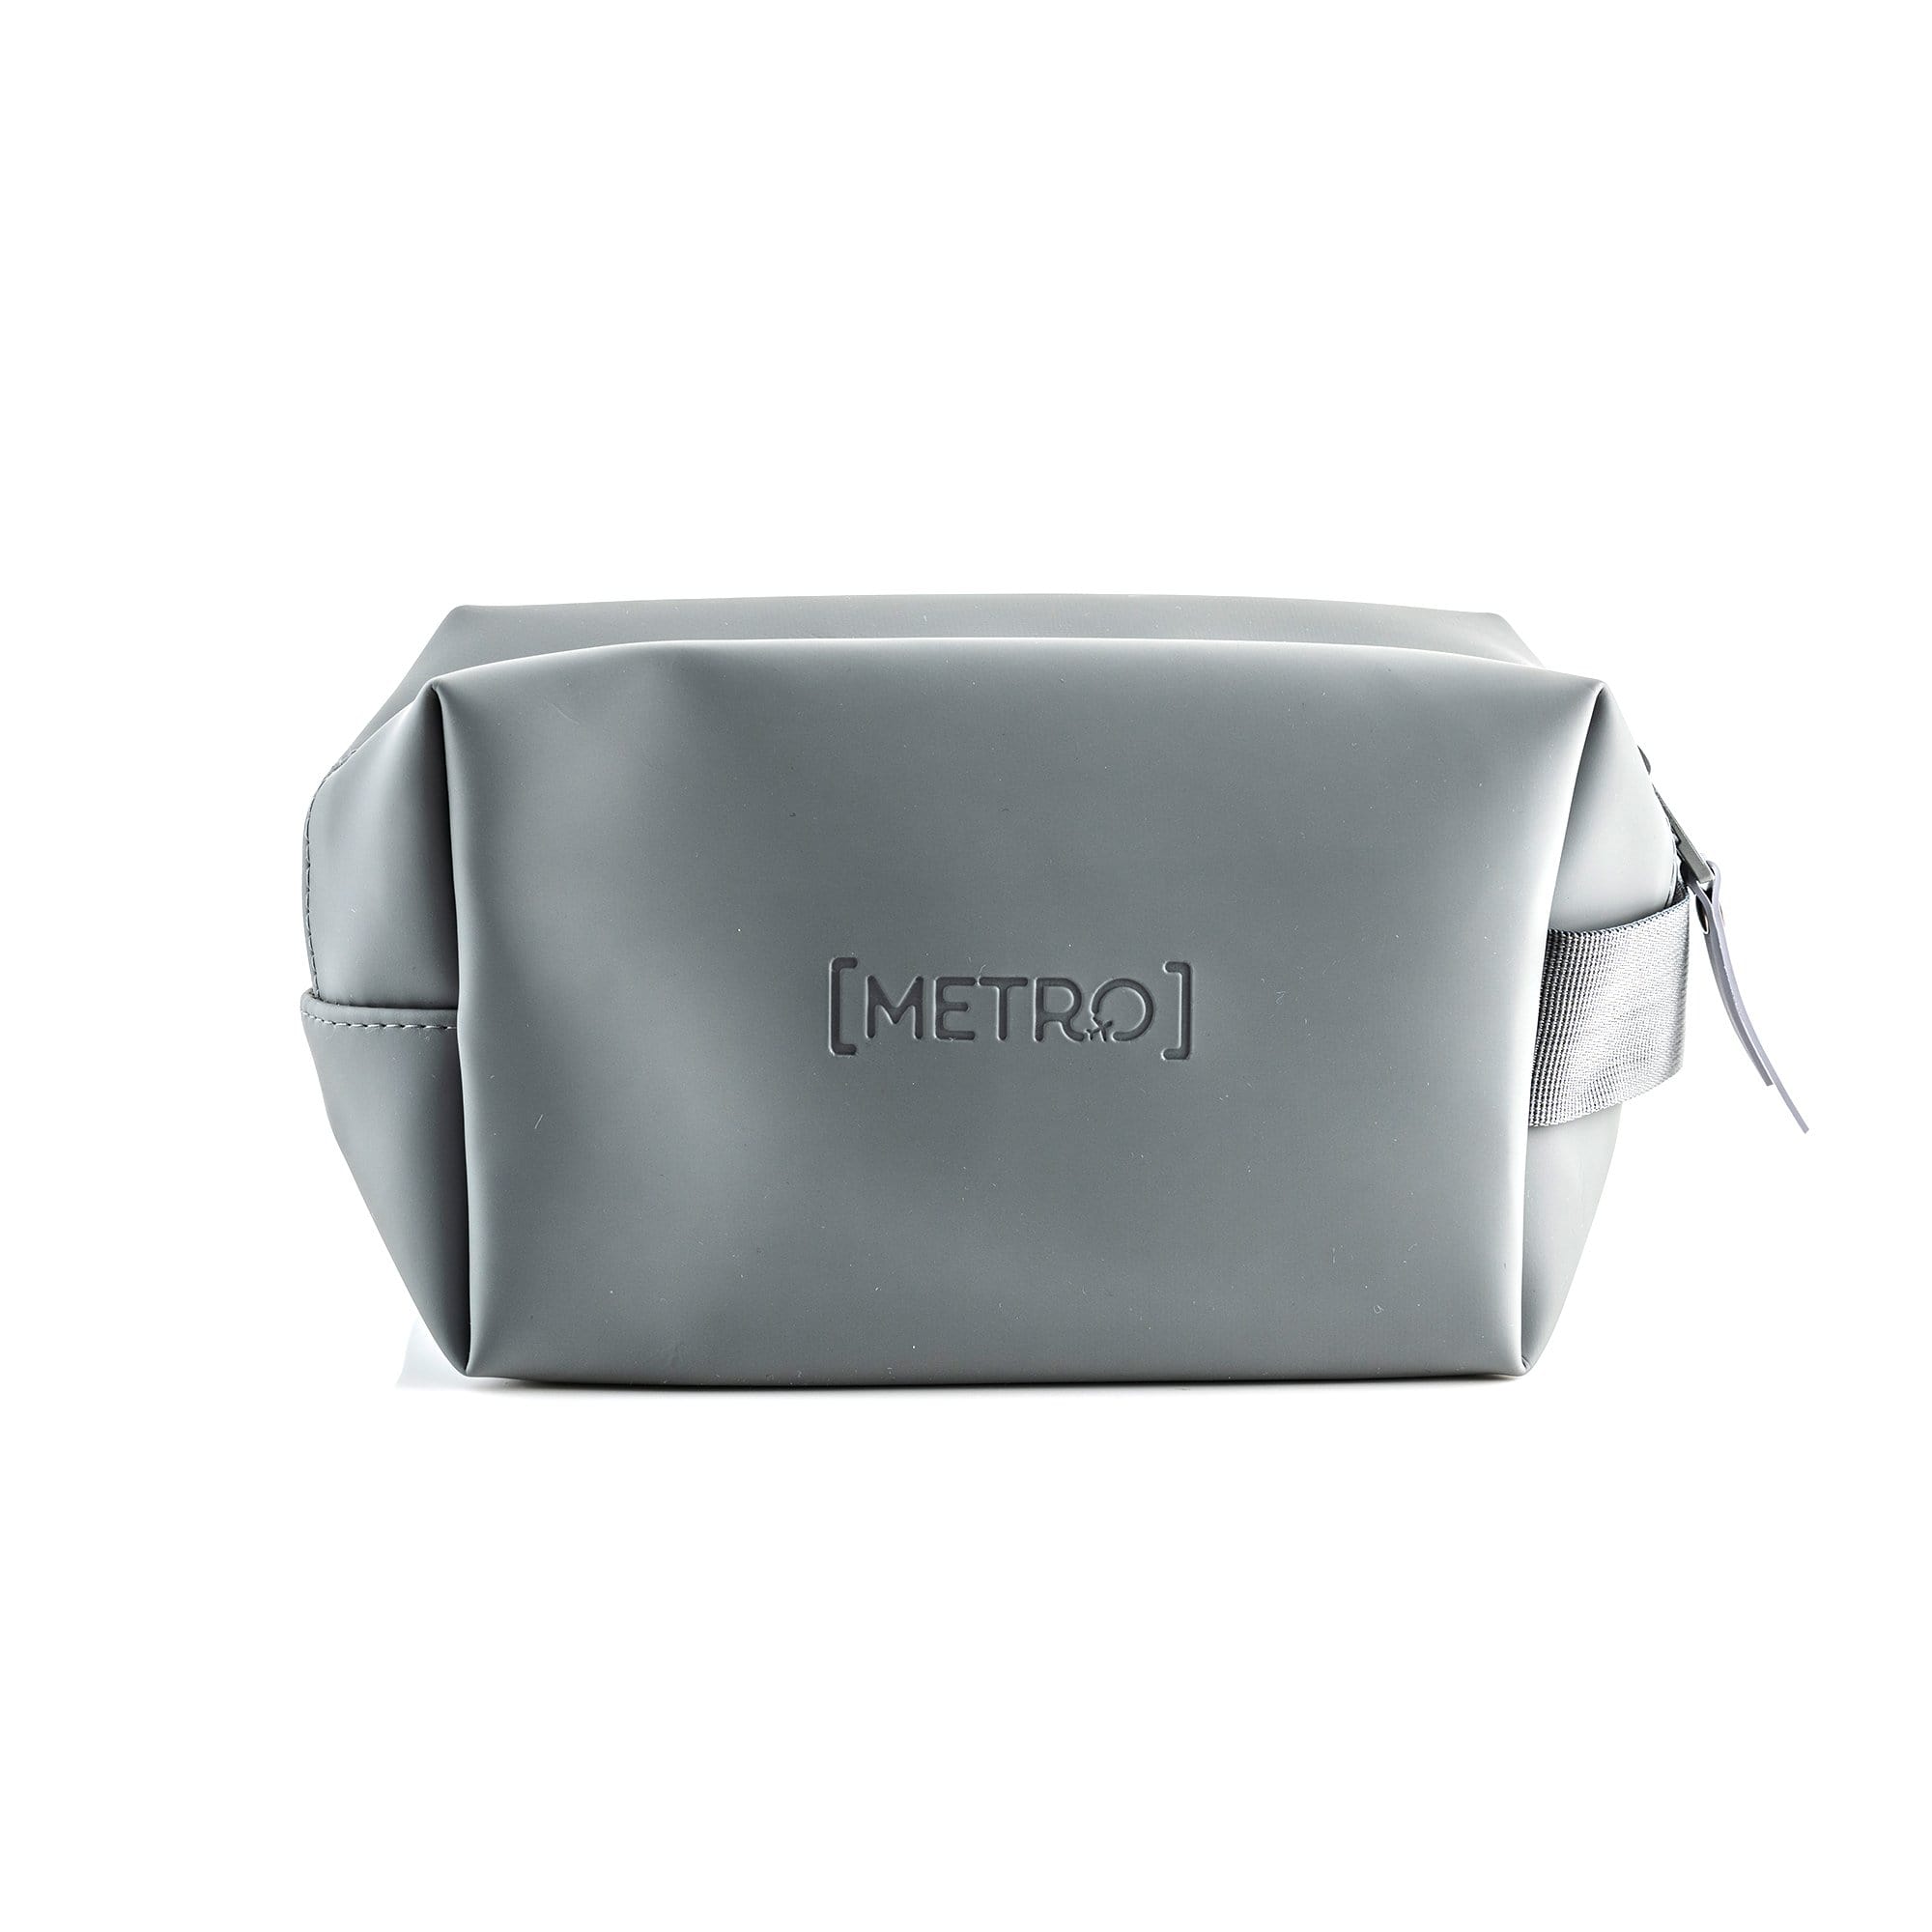 MetroMan Metro Waterproof Travel Toiletry Bag